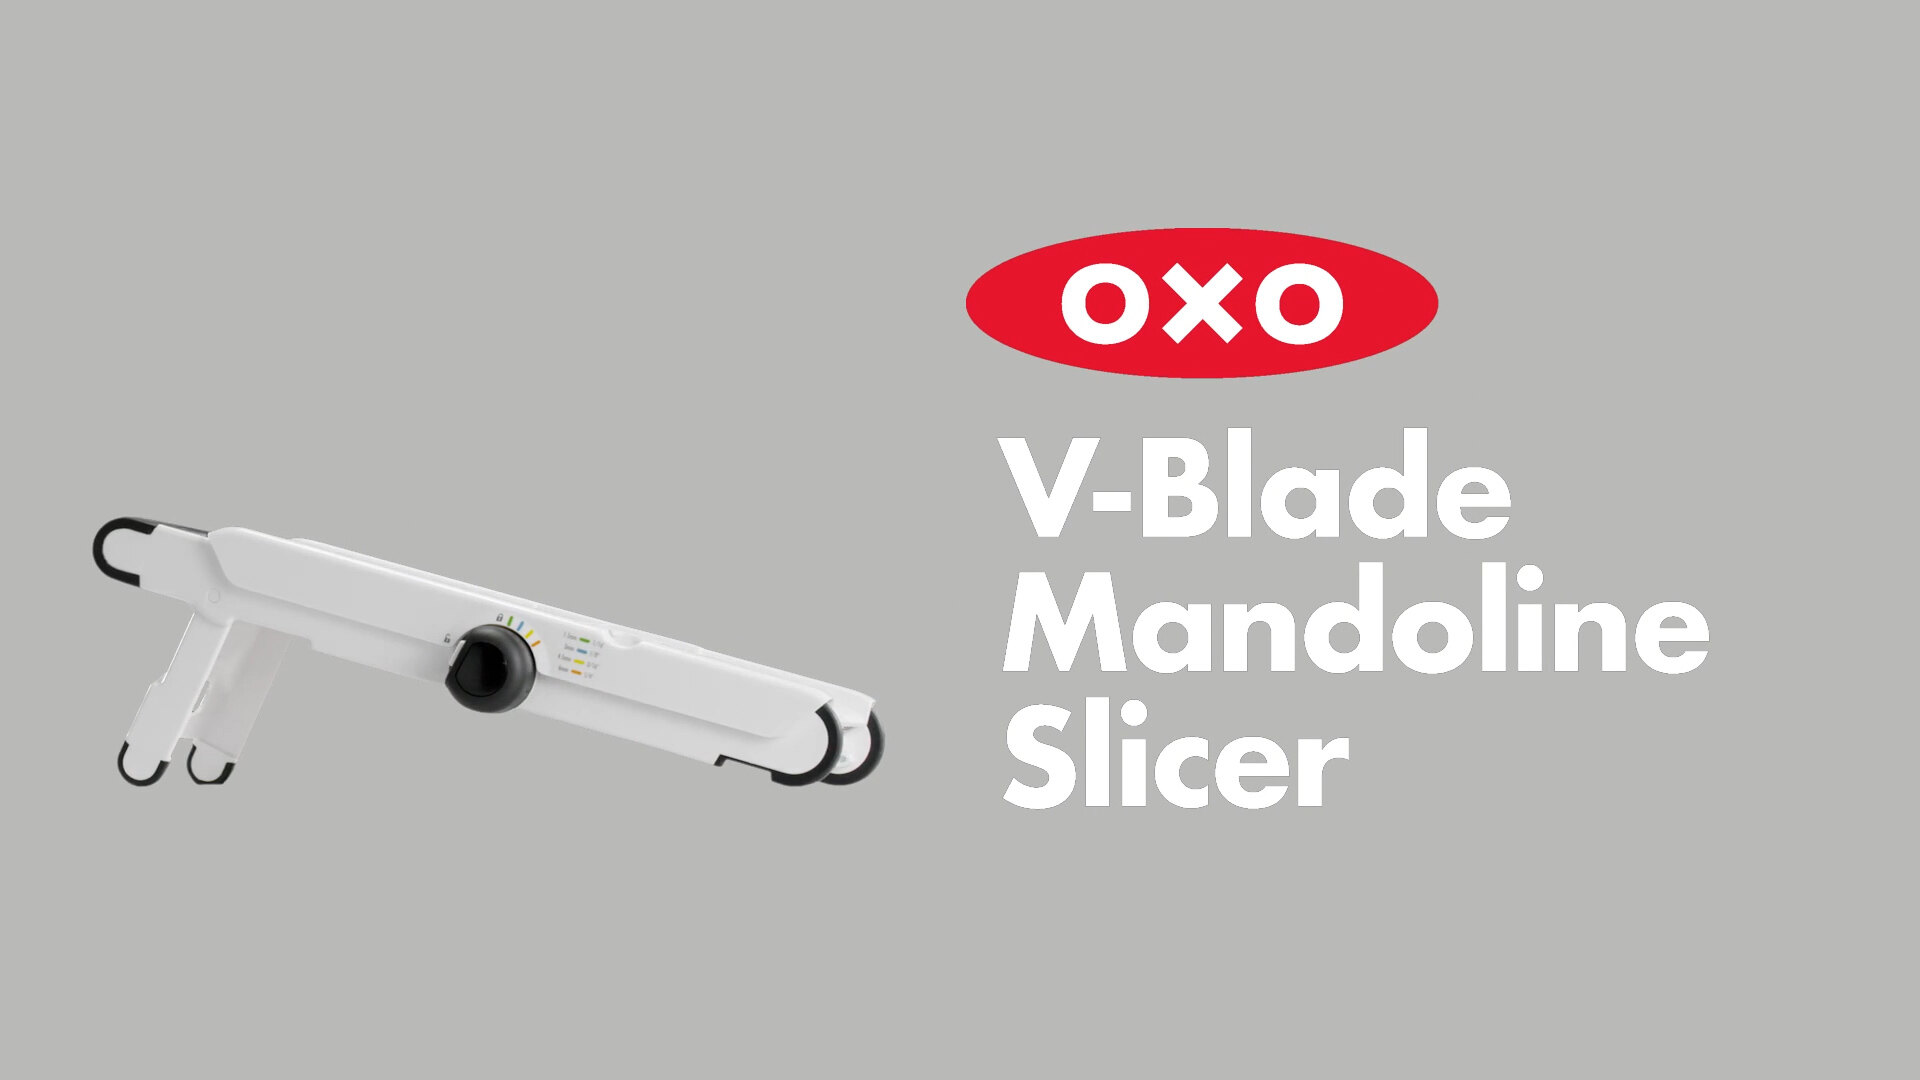 OXO V-Blade Mandoline Slicer